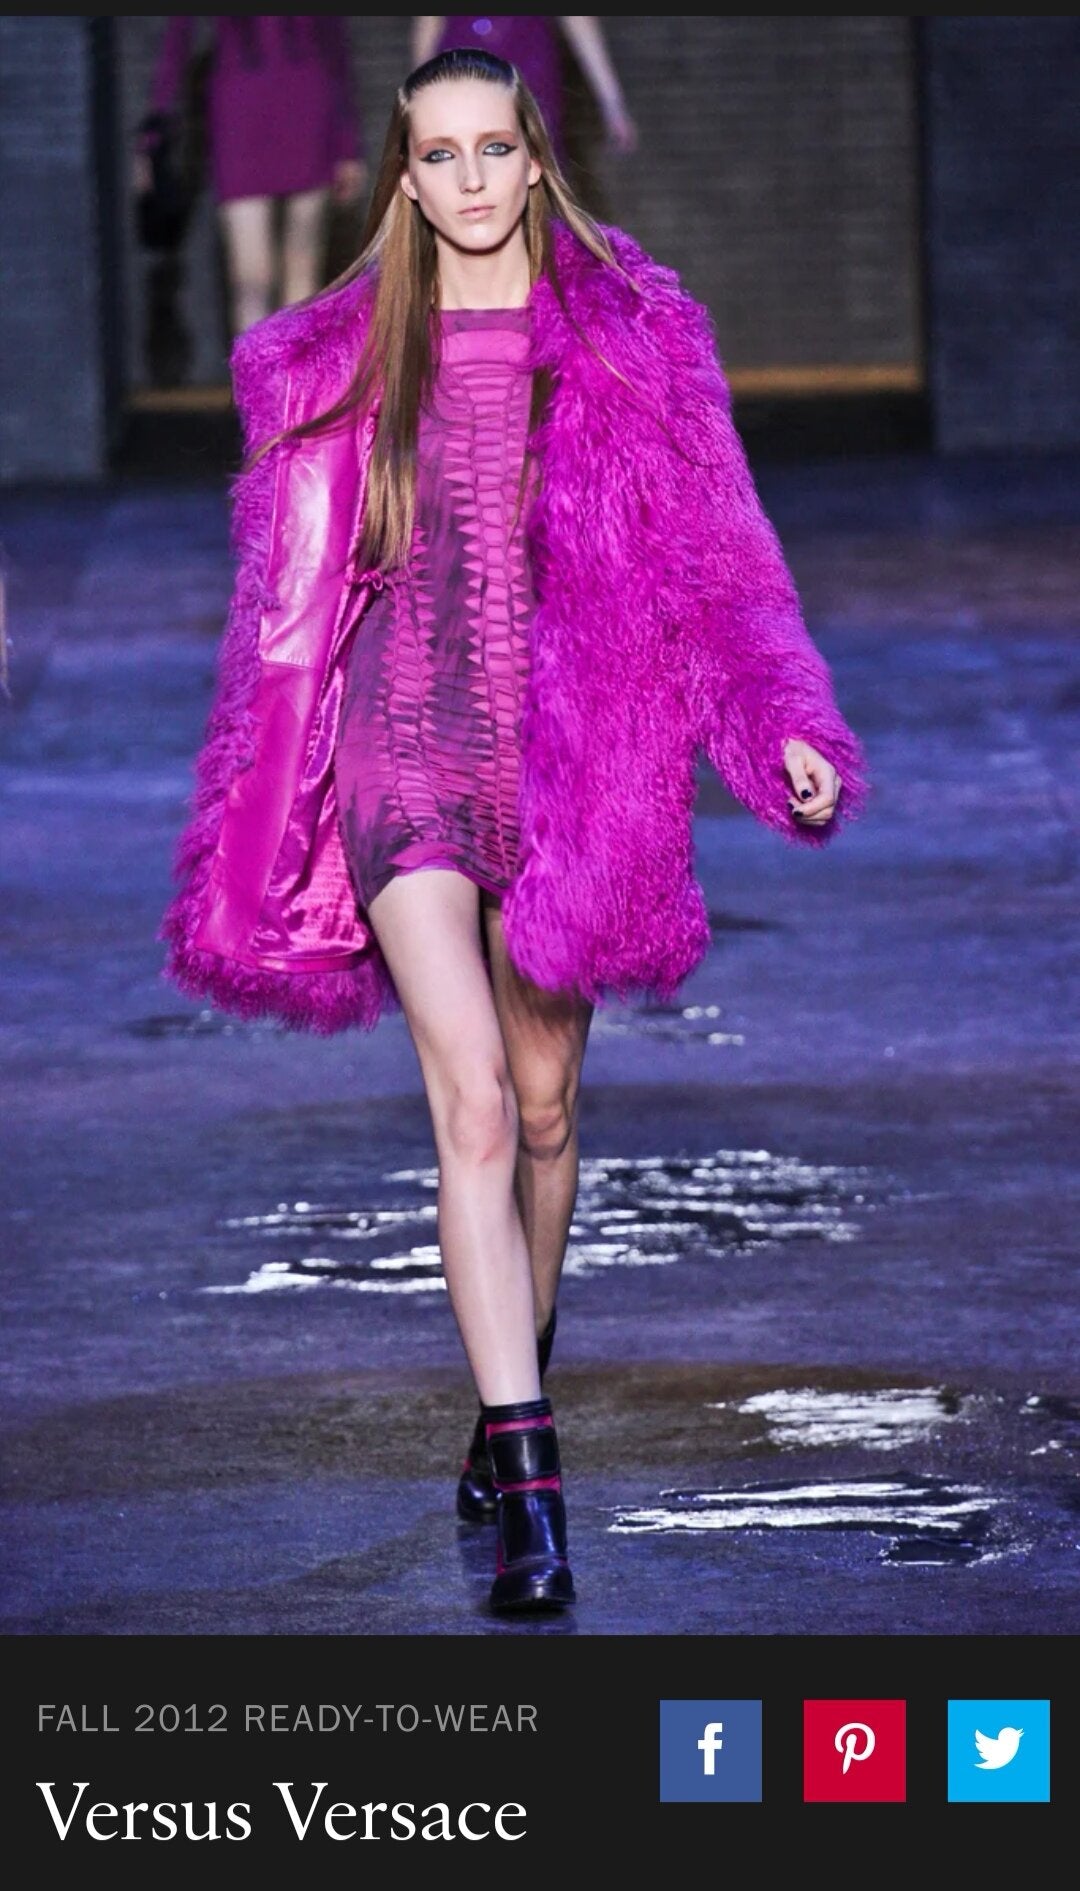 Fall 2012 Versus Versace dress - S